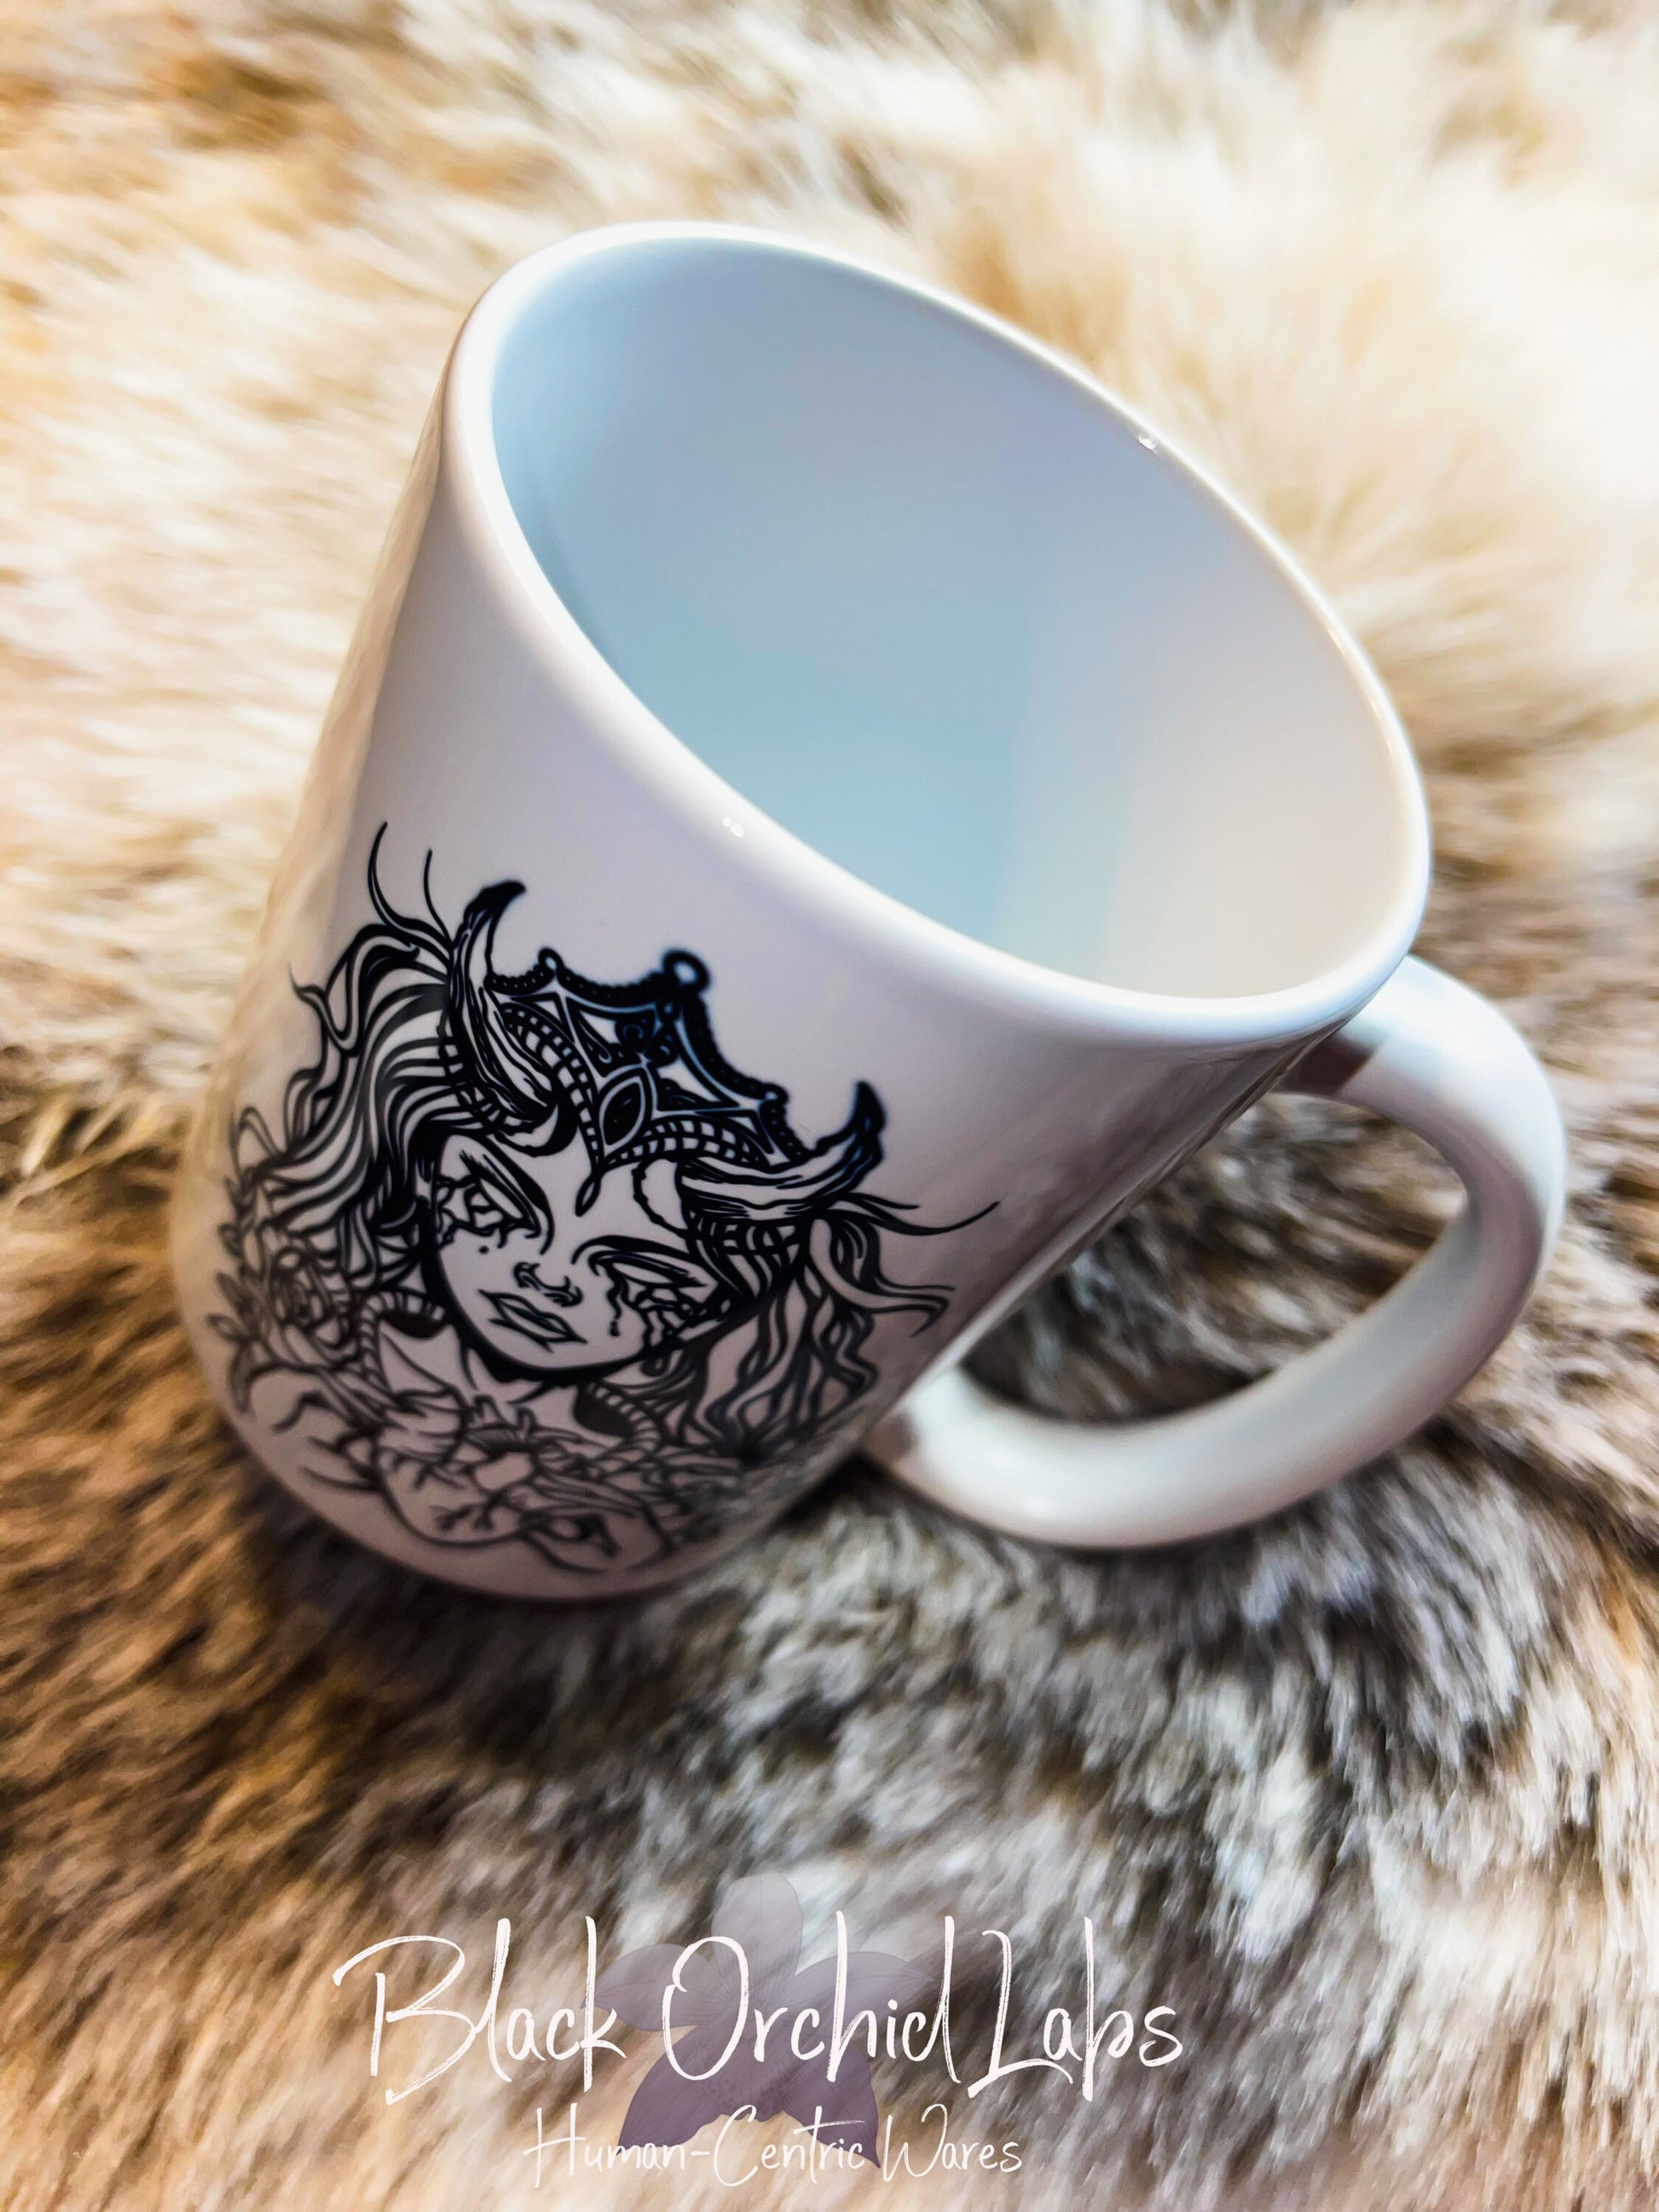 Dark Goddess Ceramic Coffee Mug, Goth goddess Message, Coffee Cup, Ceramic 15oz large coffee mug steampunk, Dark Wiccan